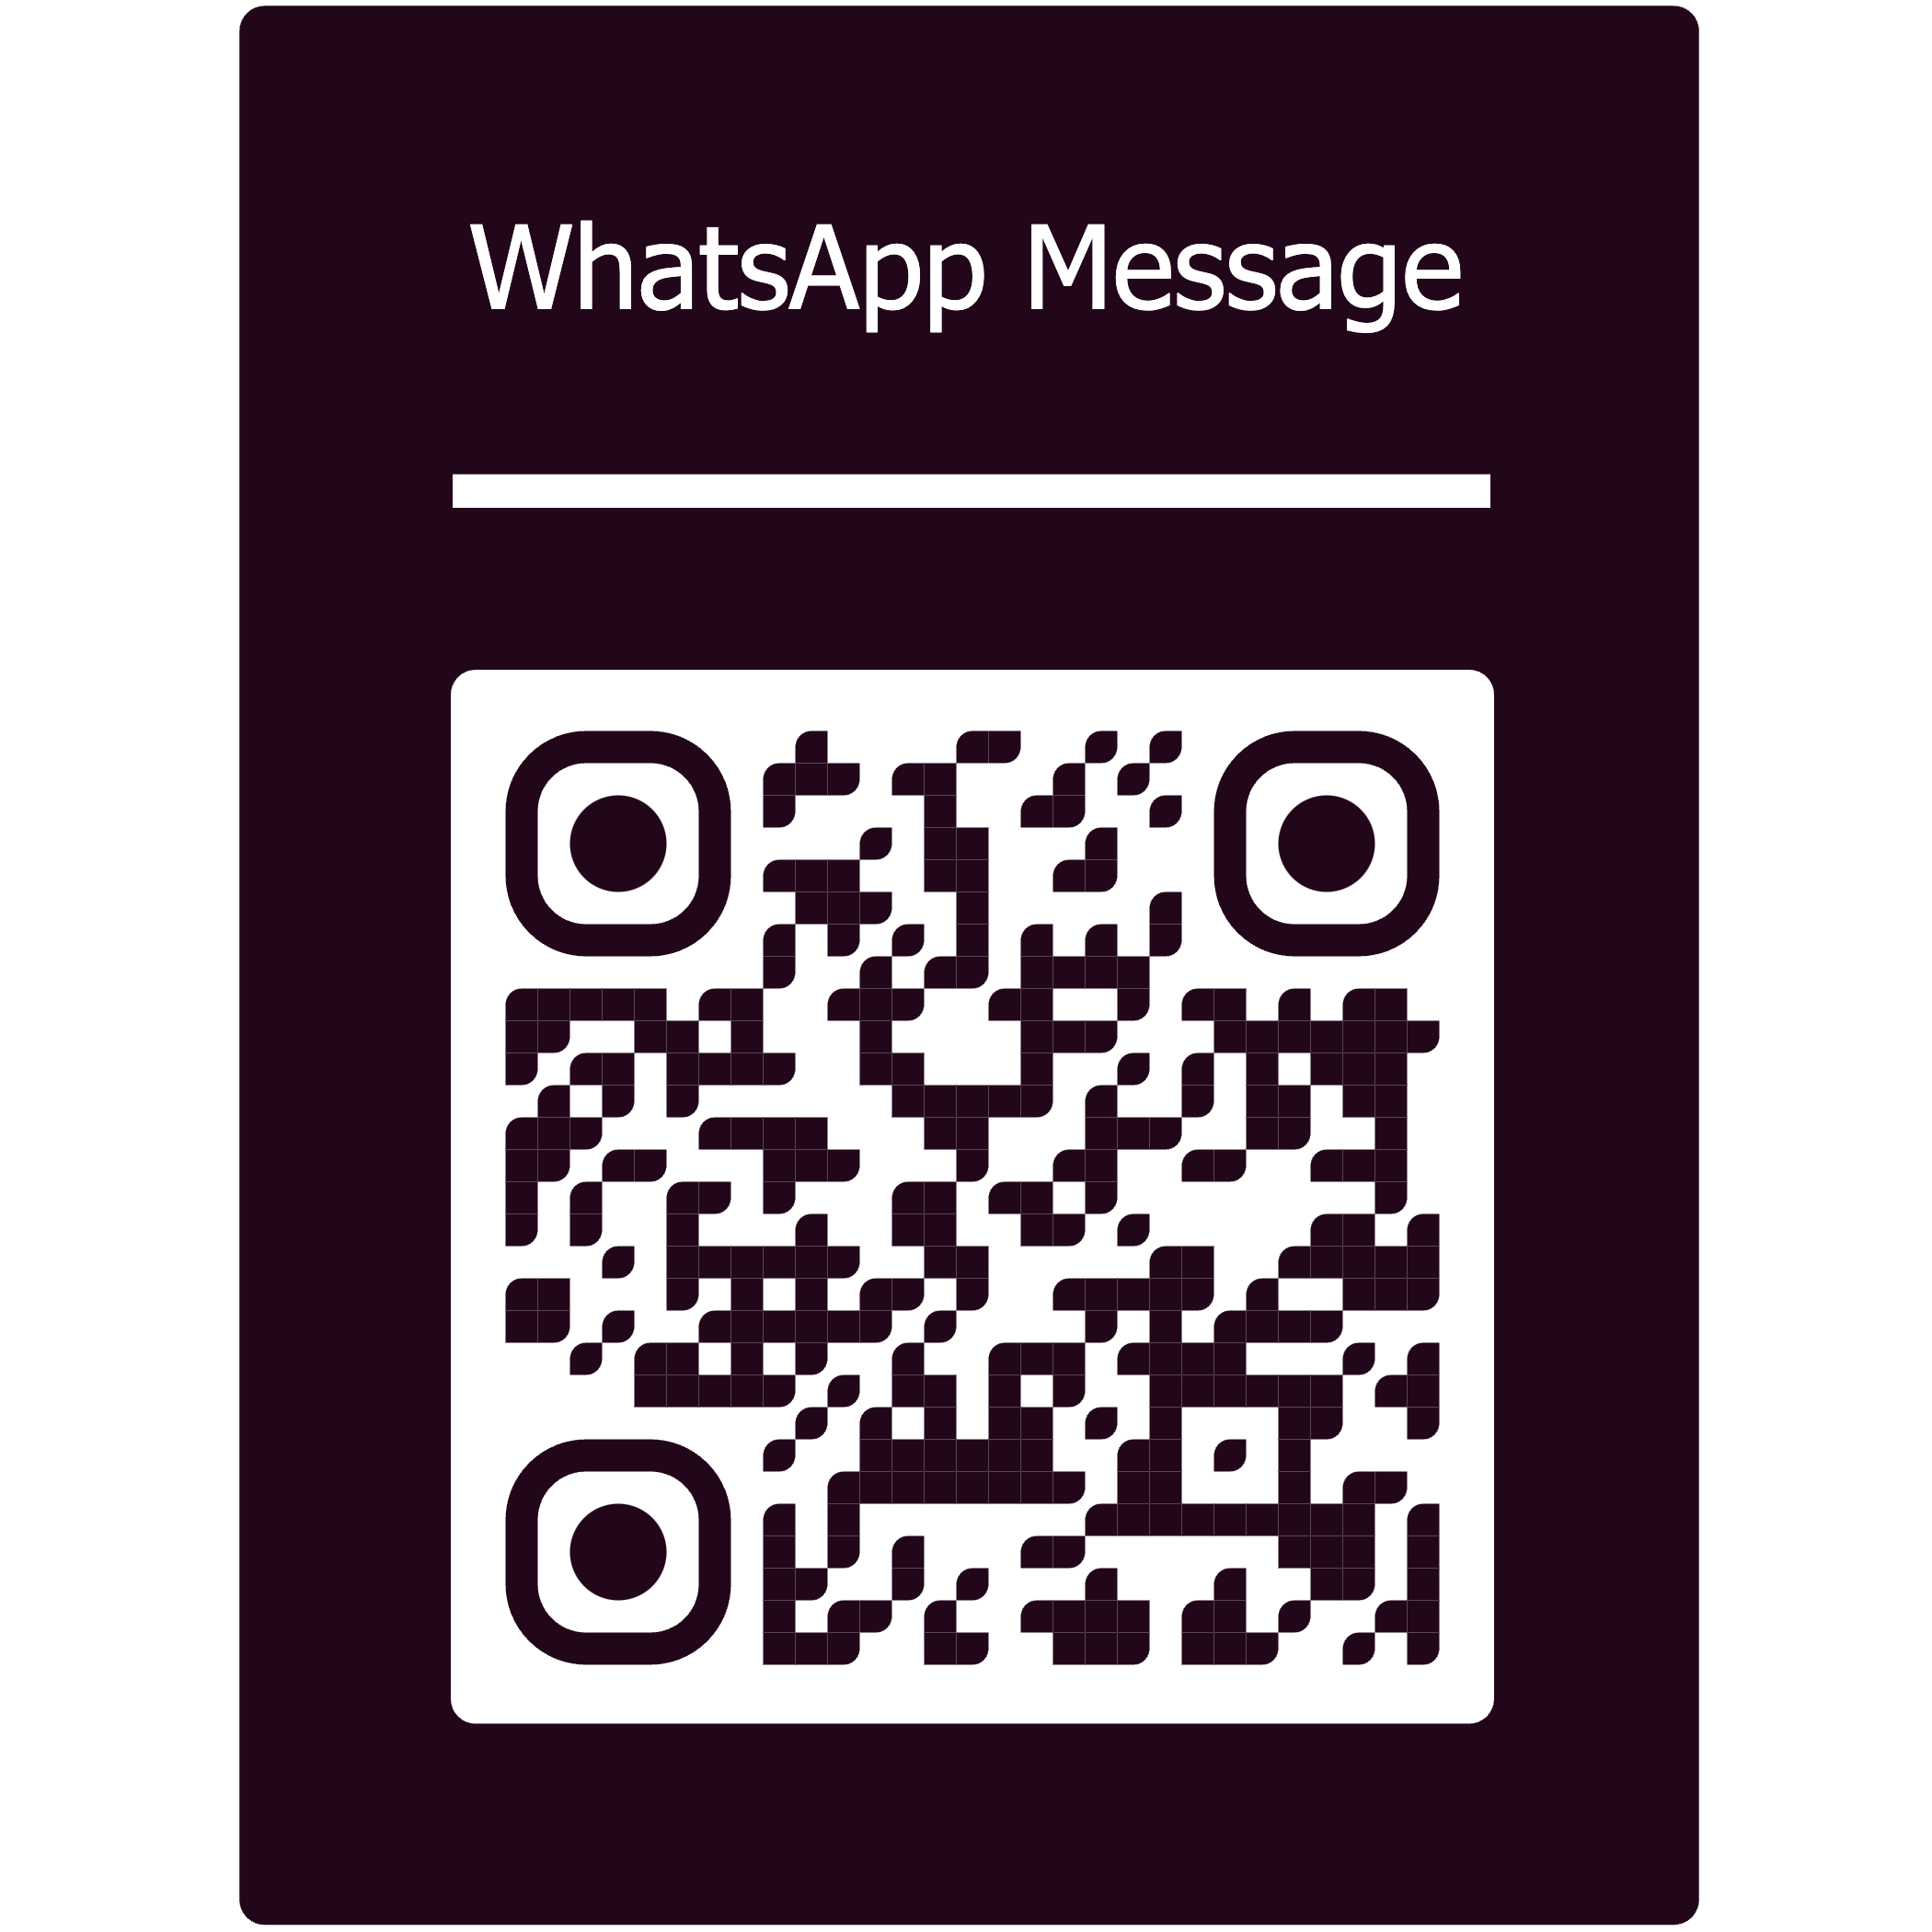 QRcode WhatsApp Message